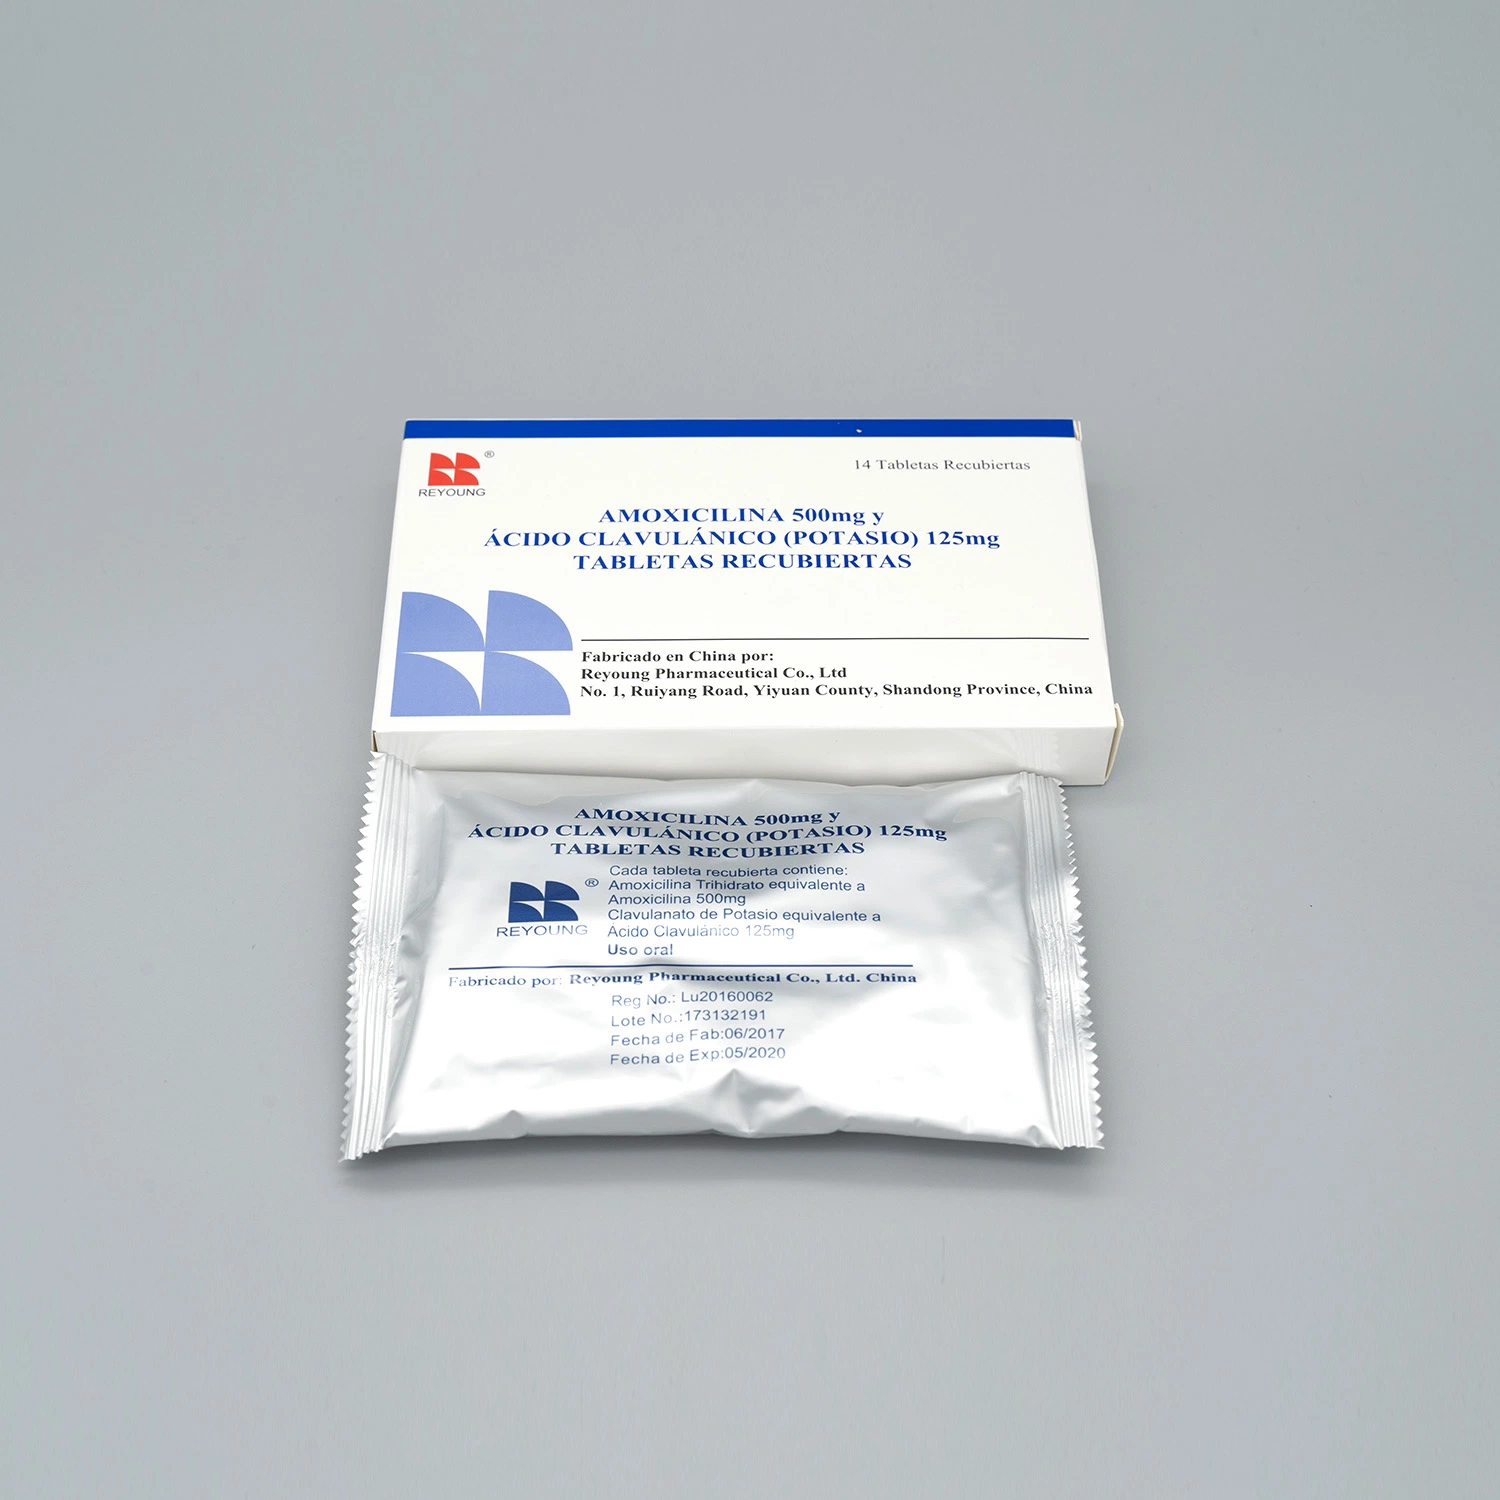 Amoxicillin and Clavulanate Potassium Tablets